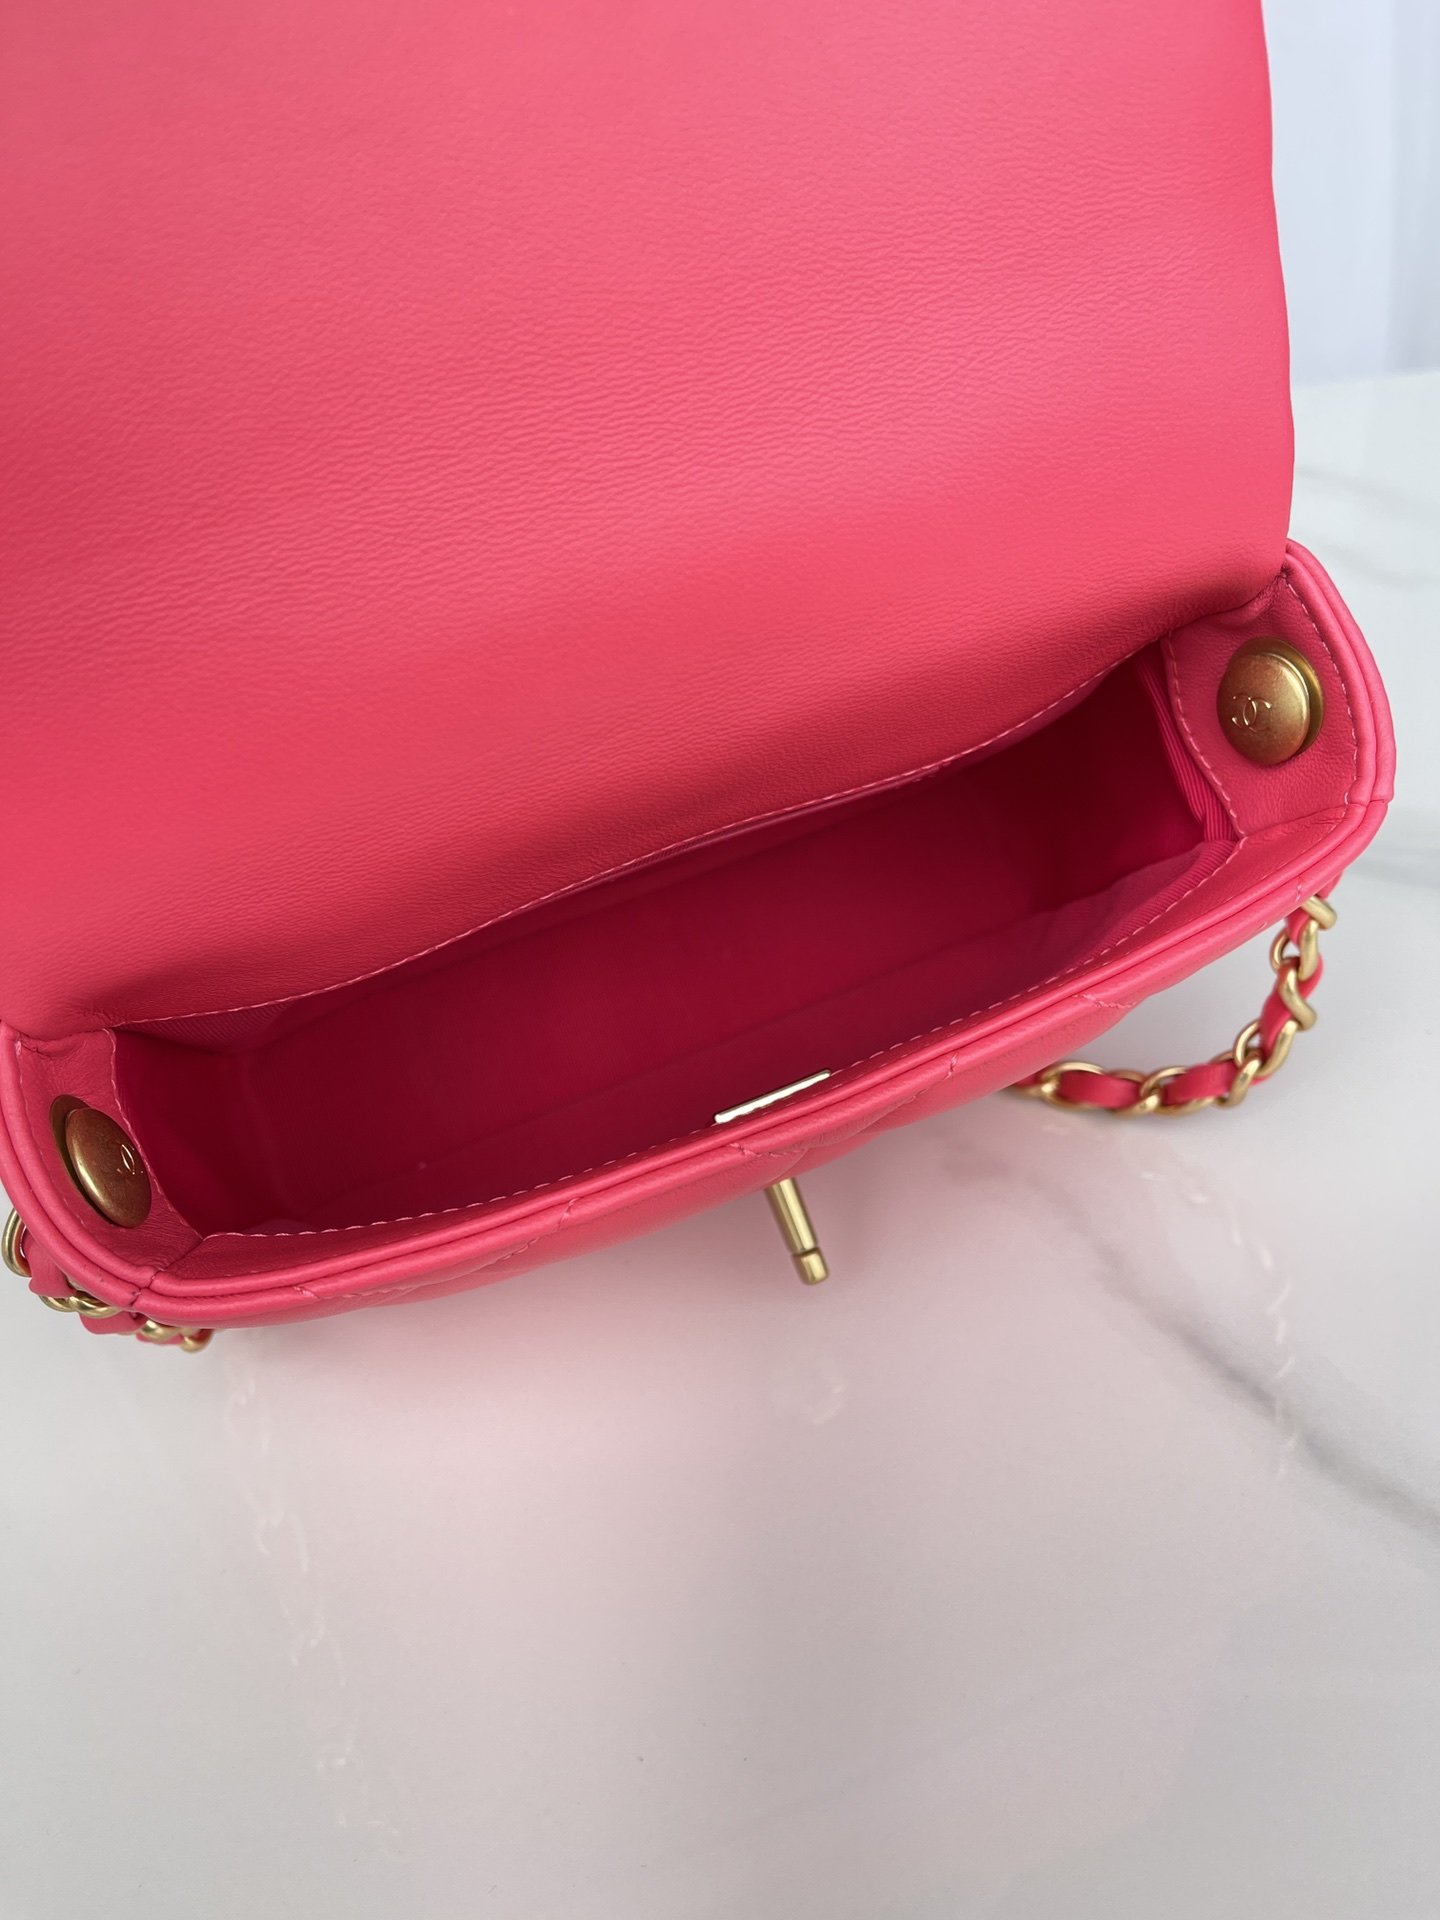 A bag Mini Flap Bag AS3979 18 cm, red фото 8